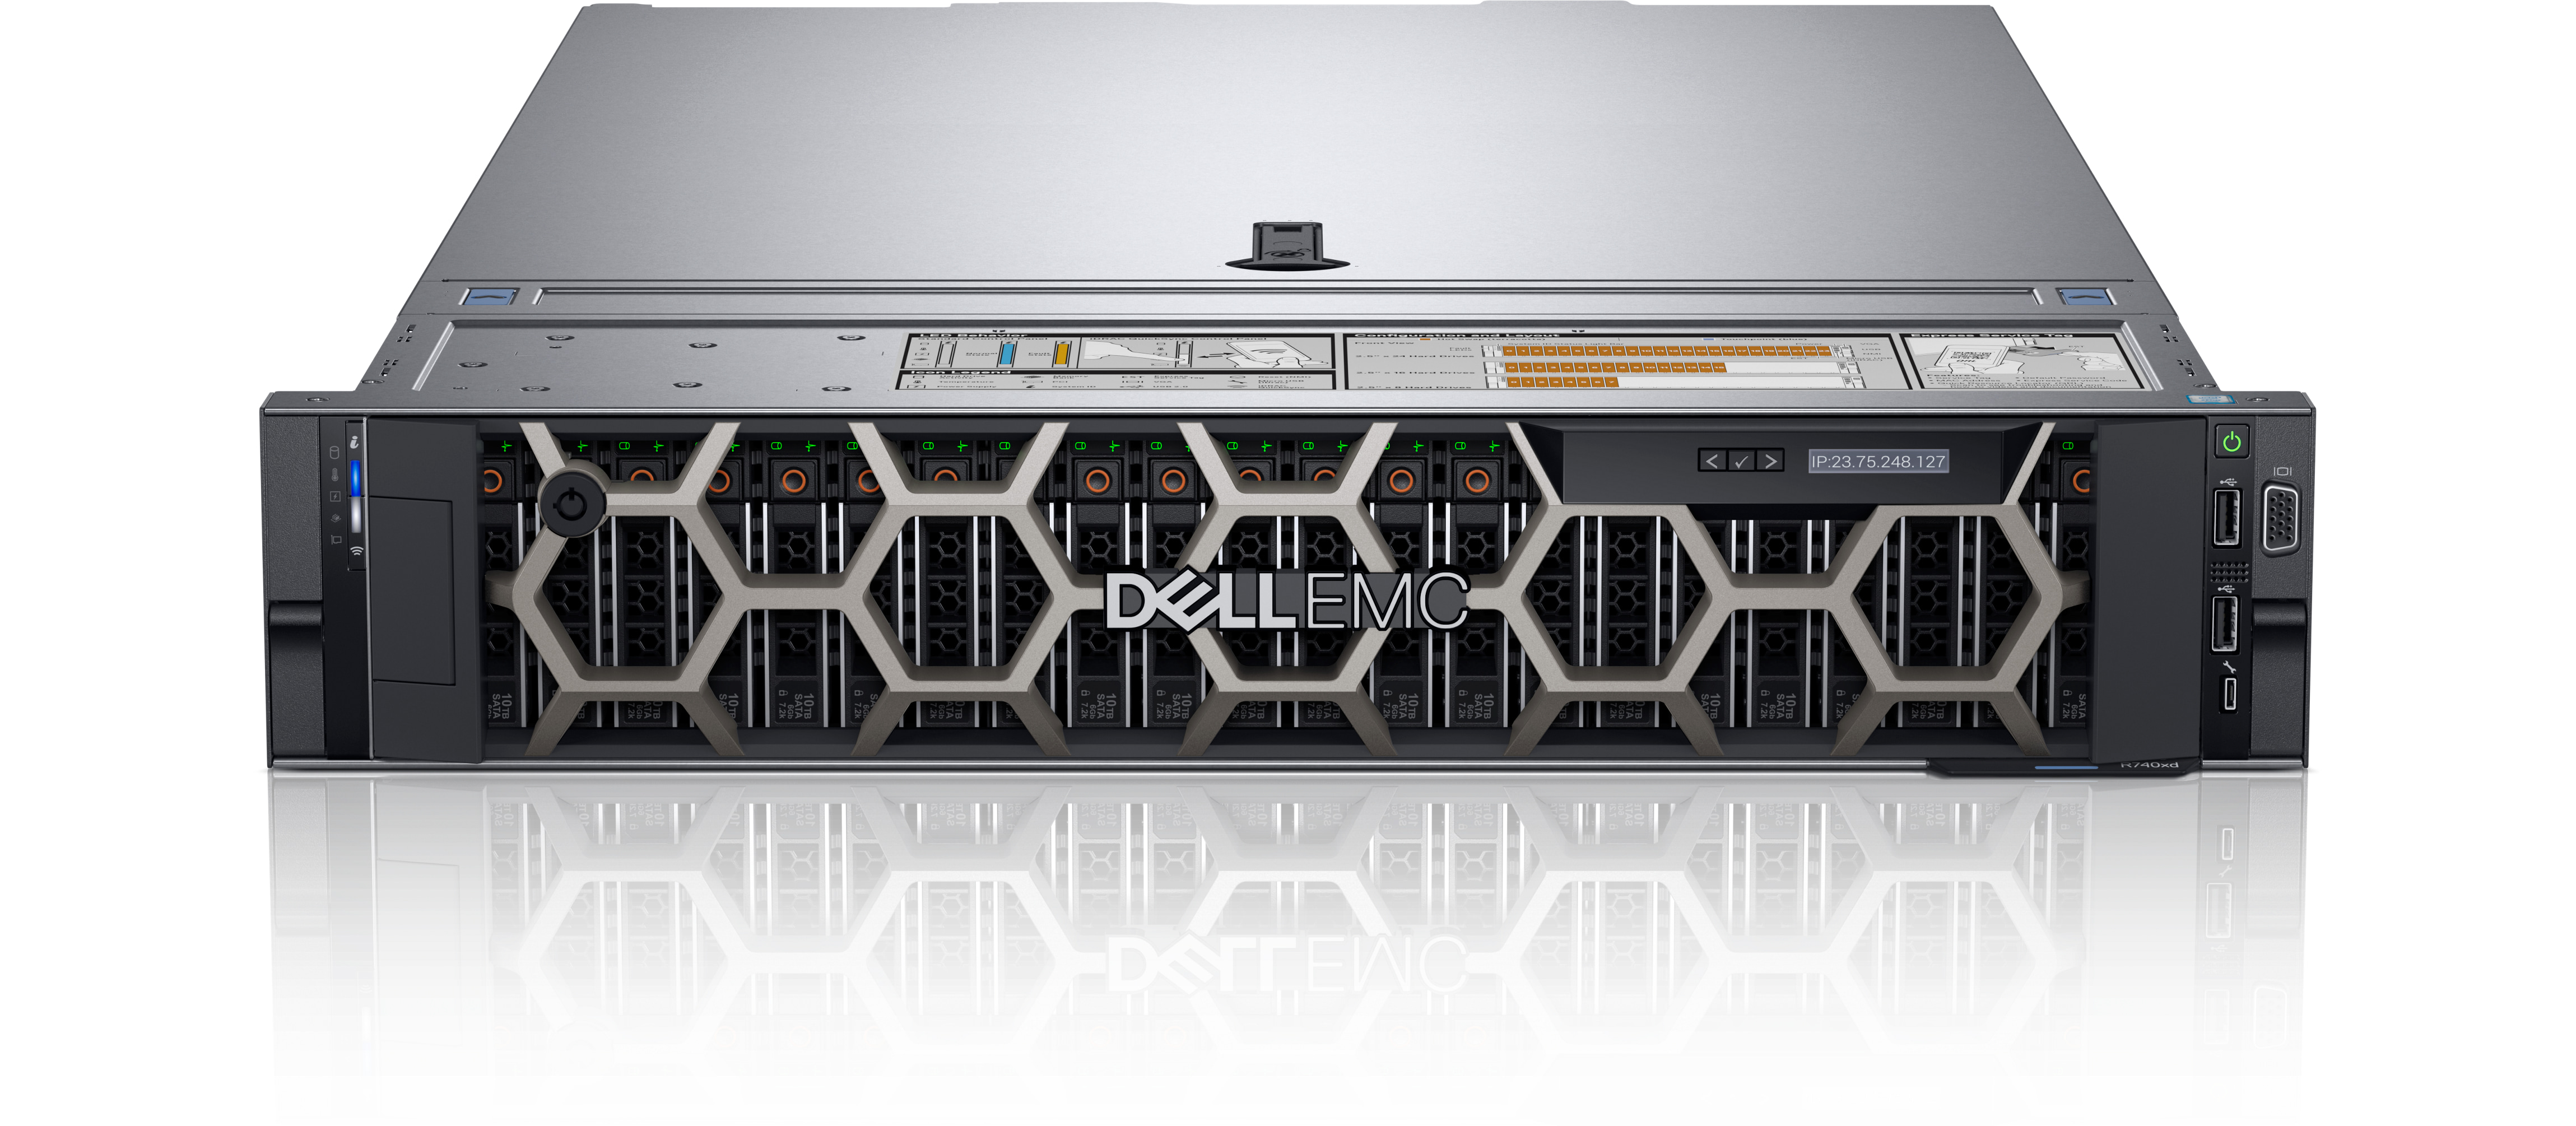 PowerEdge R740 Rack Server | Dell USA